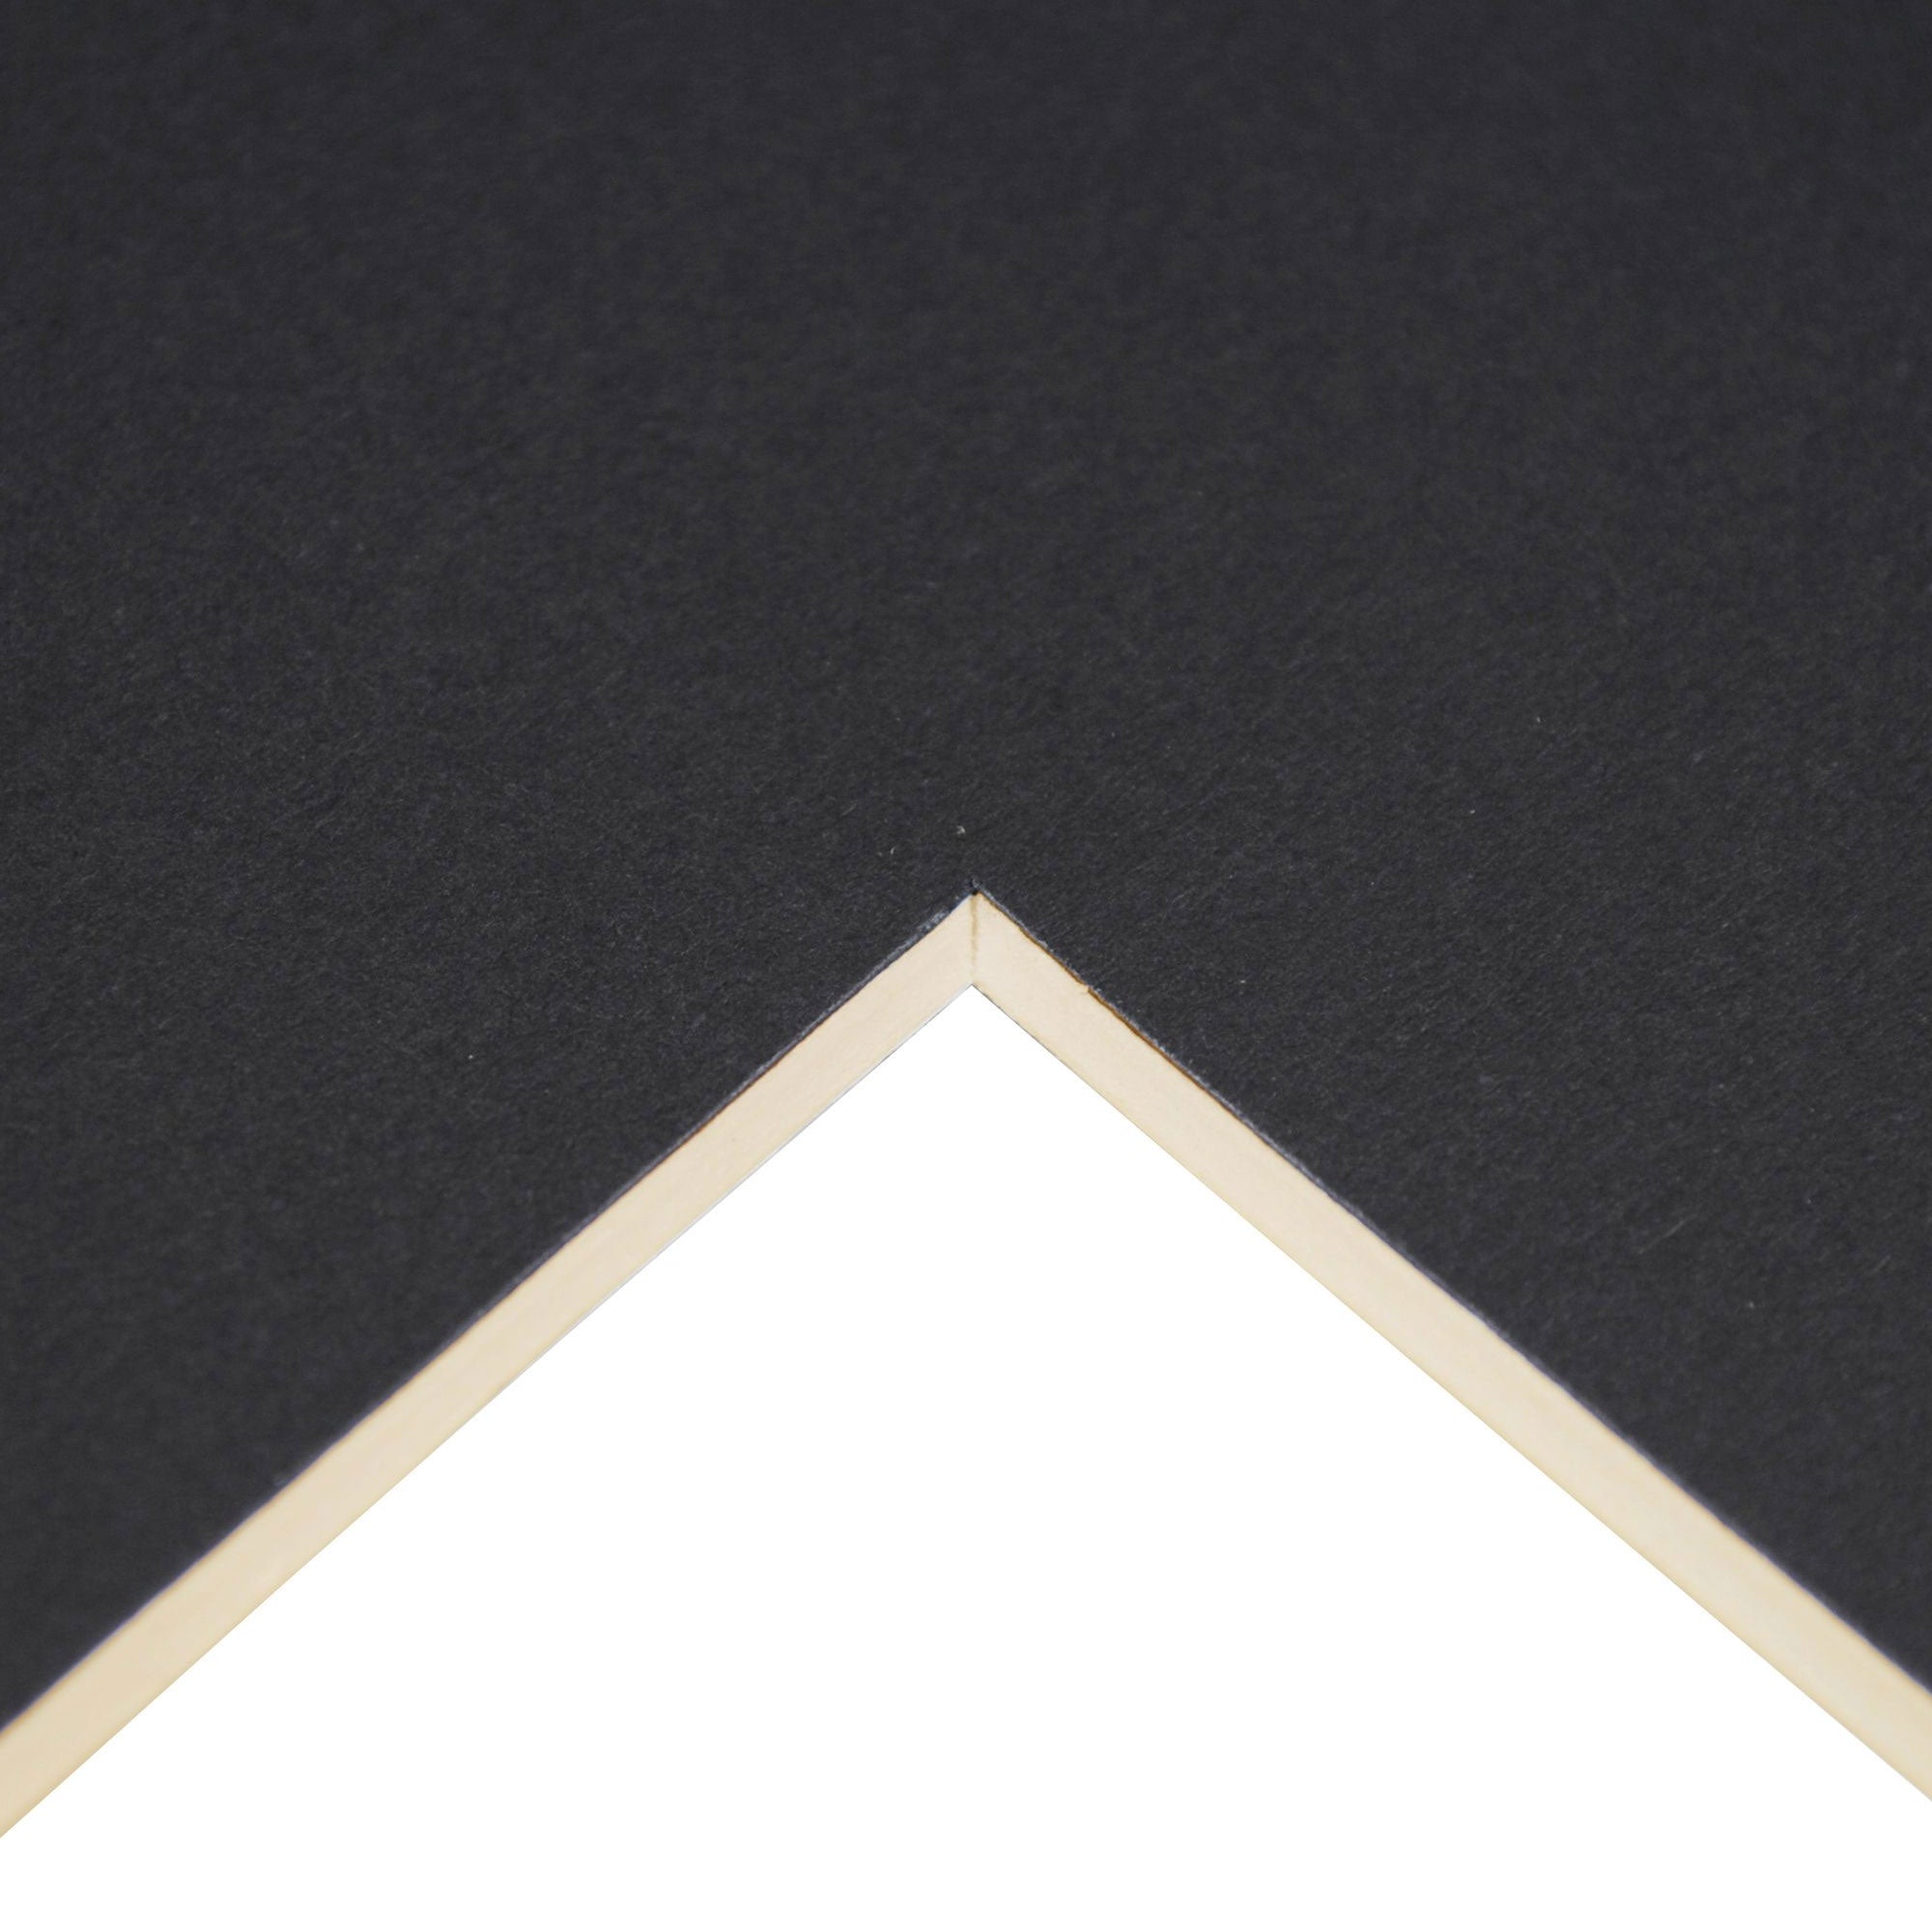 Daler-Rowney Studland Mount Board - Cream Core - A1 - Charcoal Black